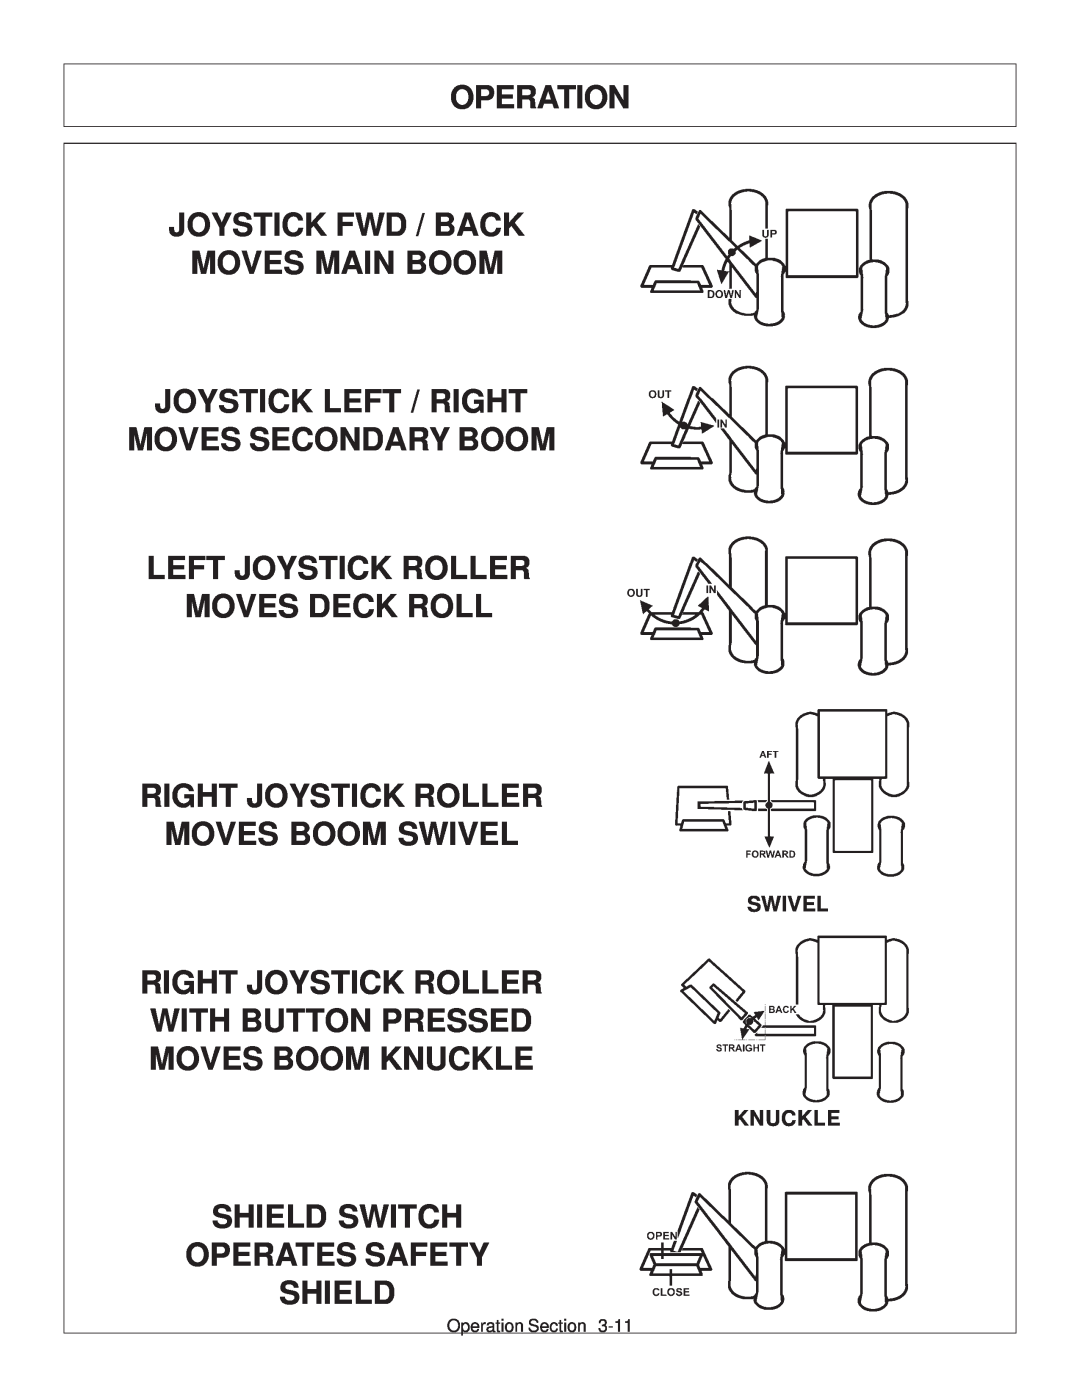 Tiger JD 62-6420 manual Joystick Fwd / Back Moves Main Boom Joystick Left / Right, Right Joystick Roller Moves Boom Swivel 